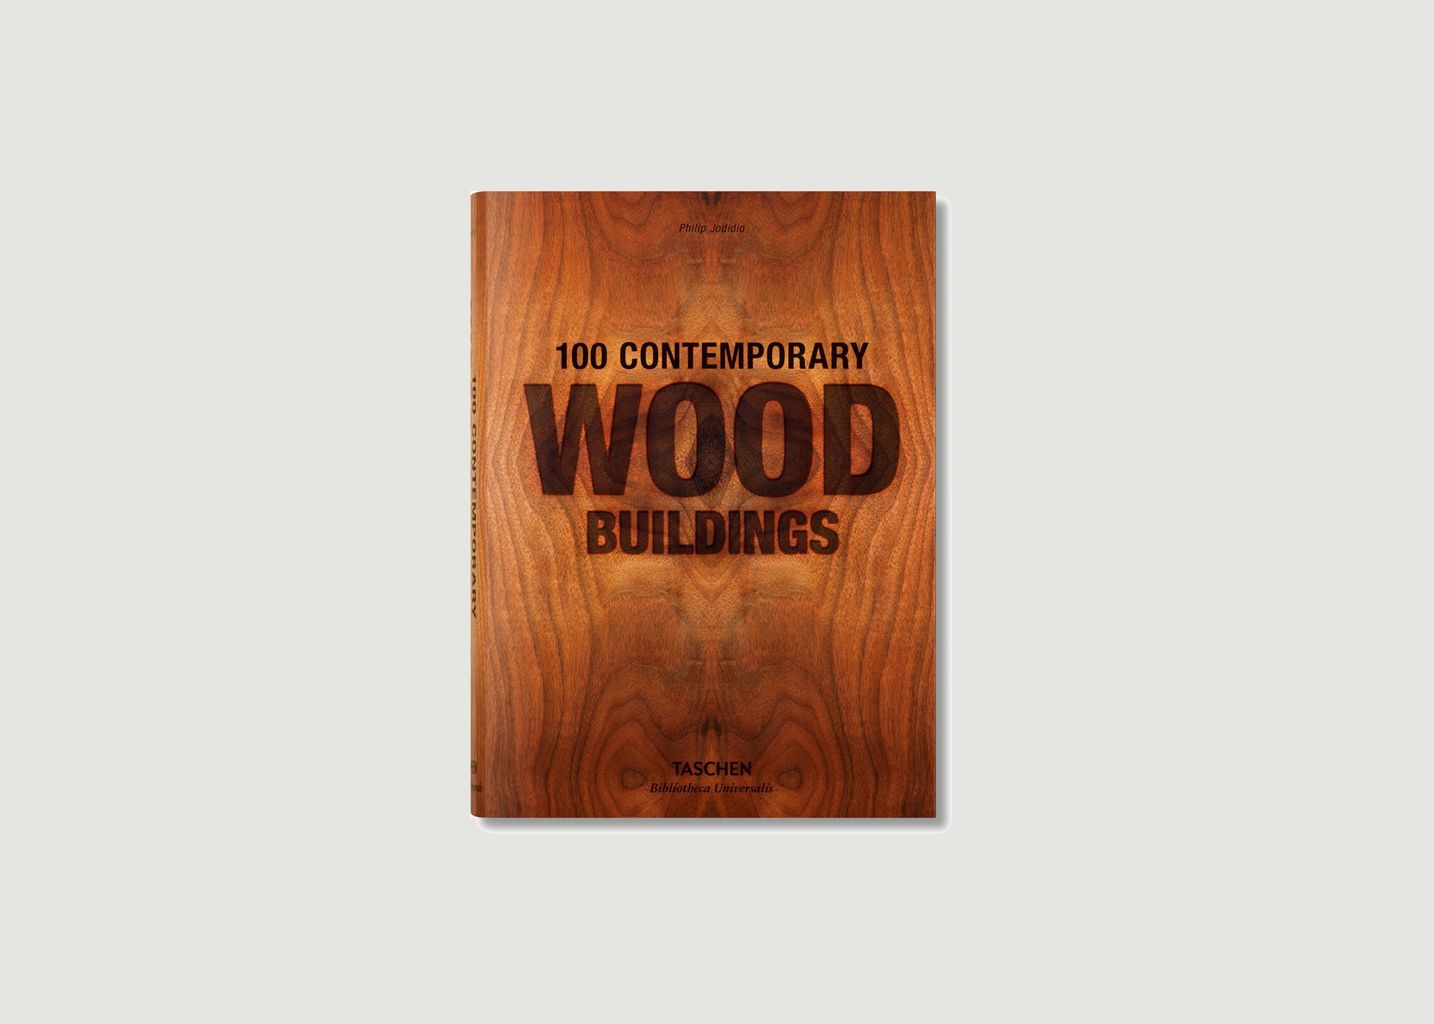 100 Contemporary Wood Buildings - Taschen